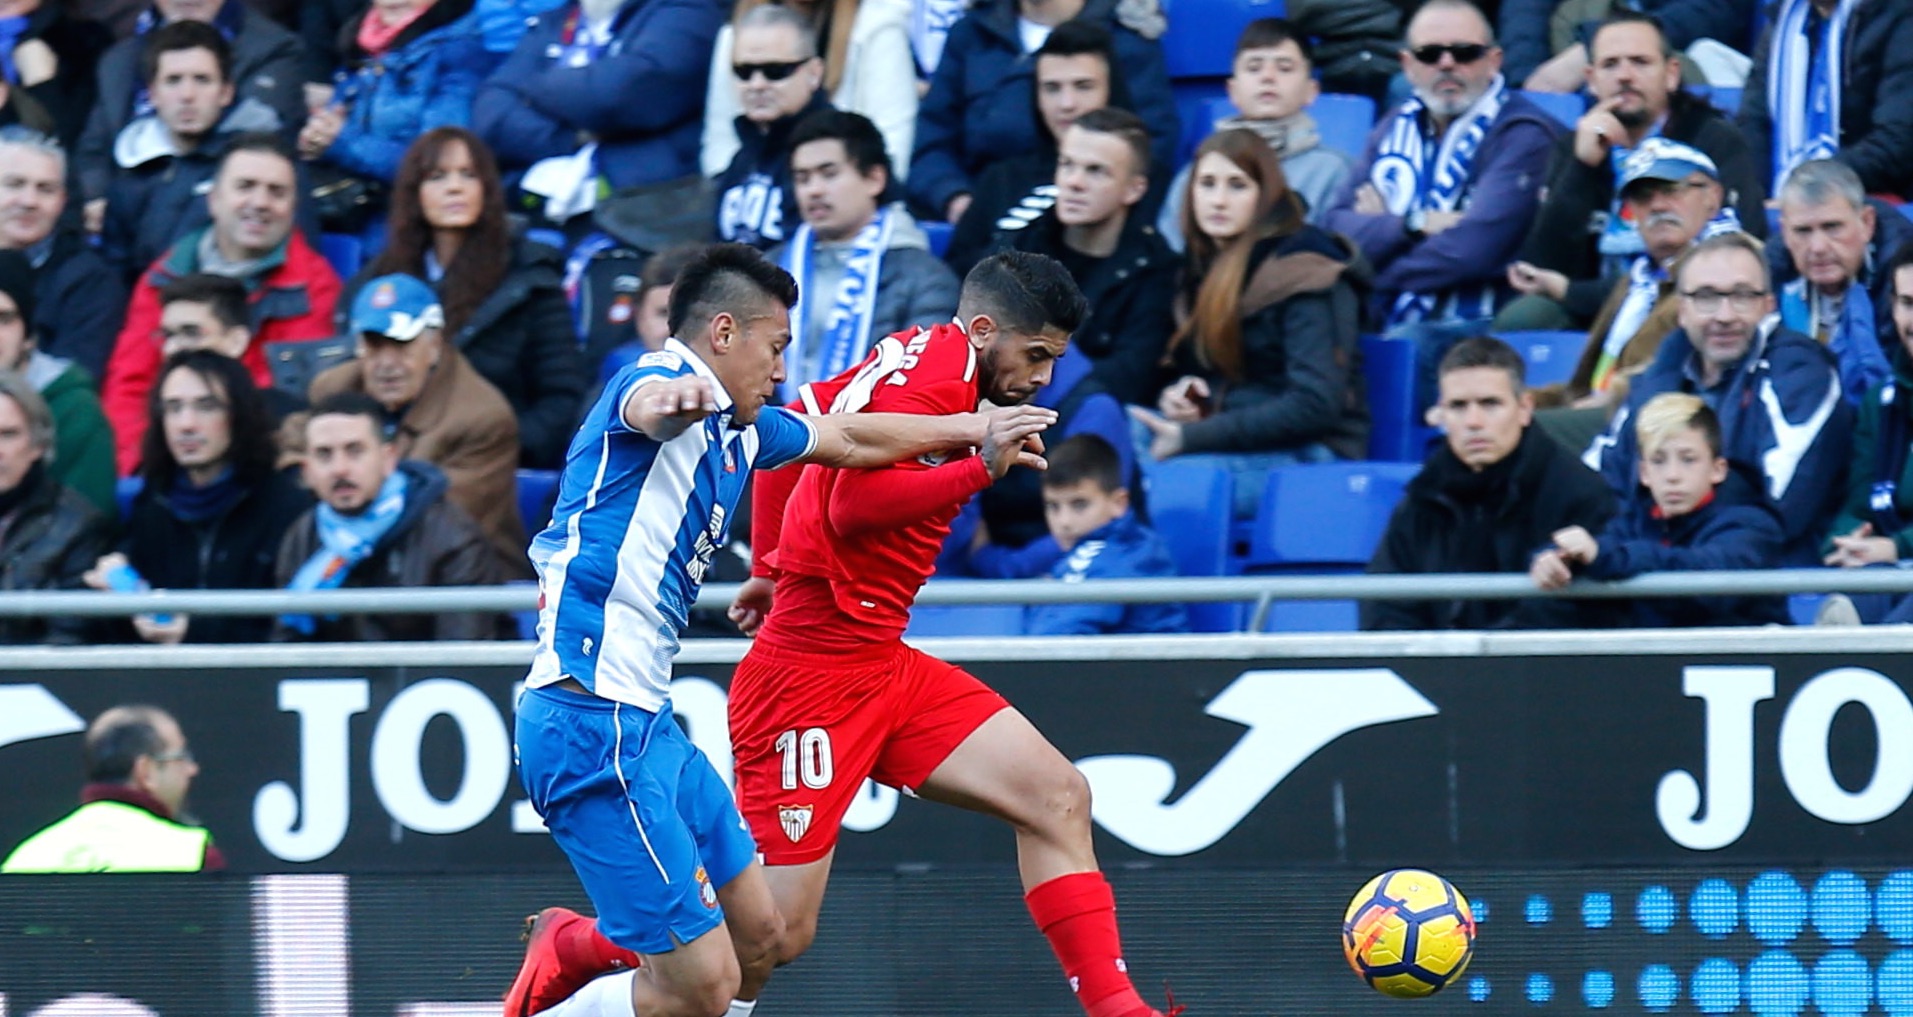 Banega disputa una pelota en el partido contra el Espanyol